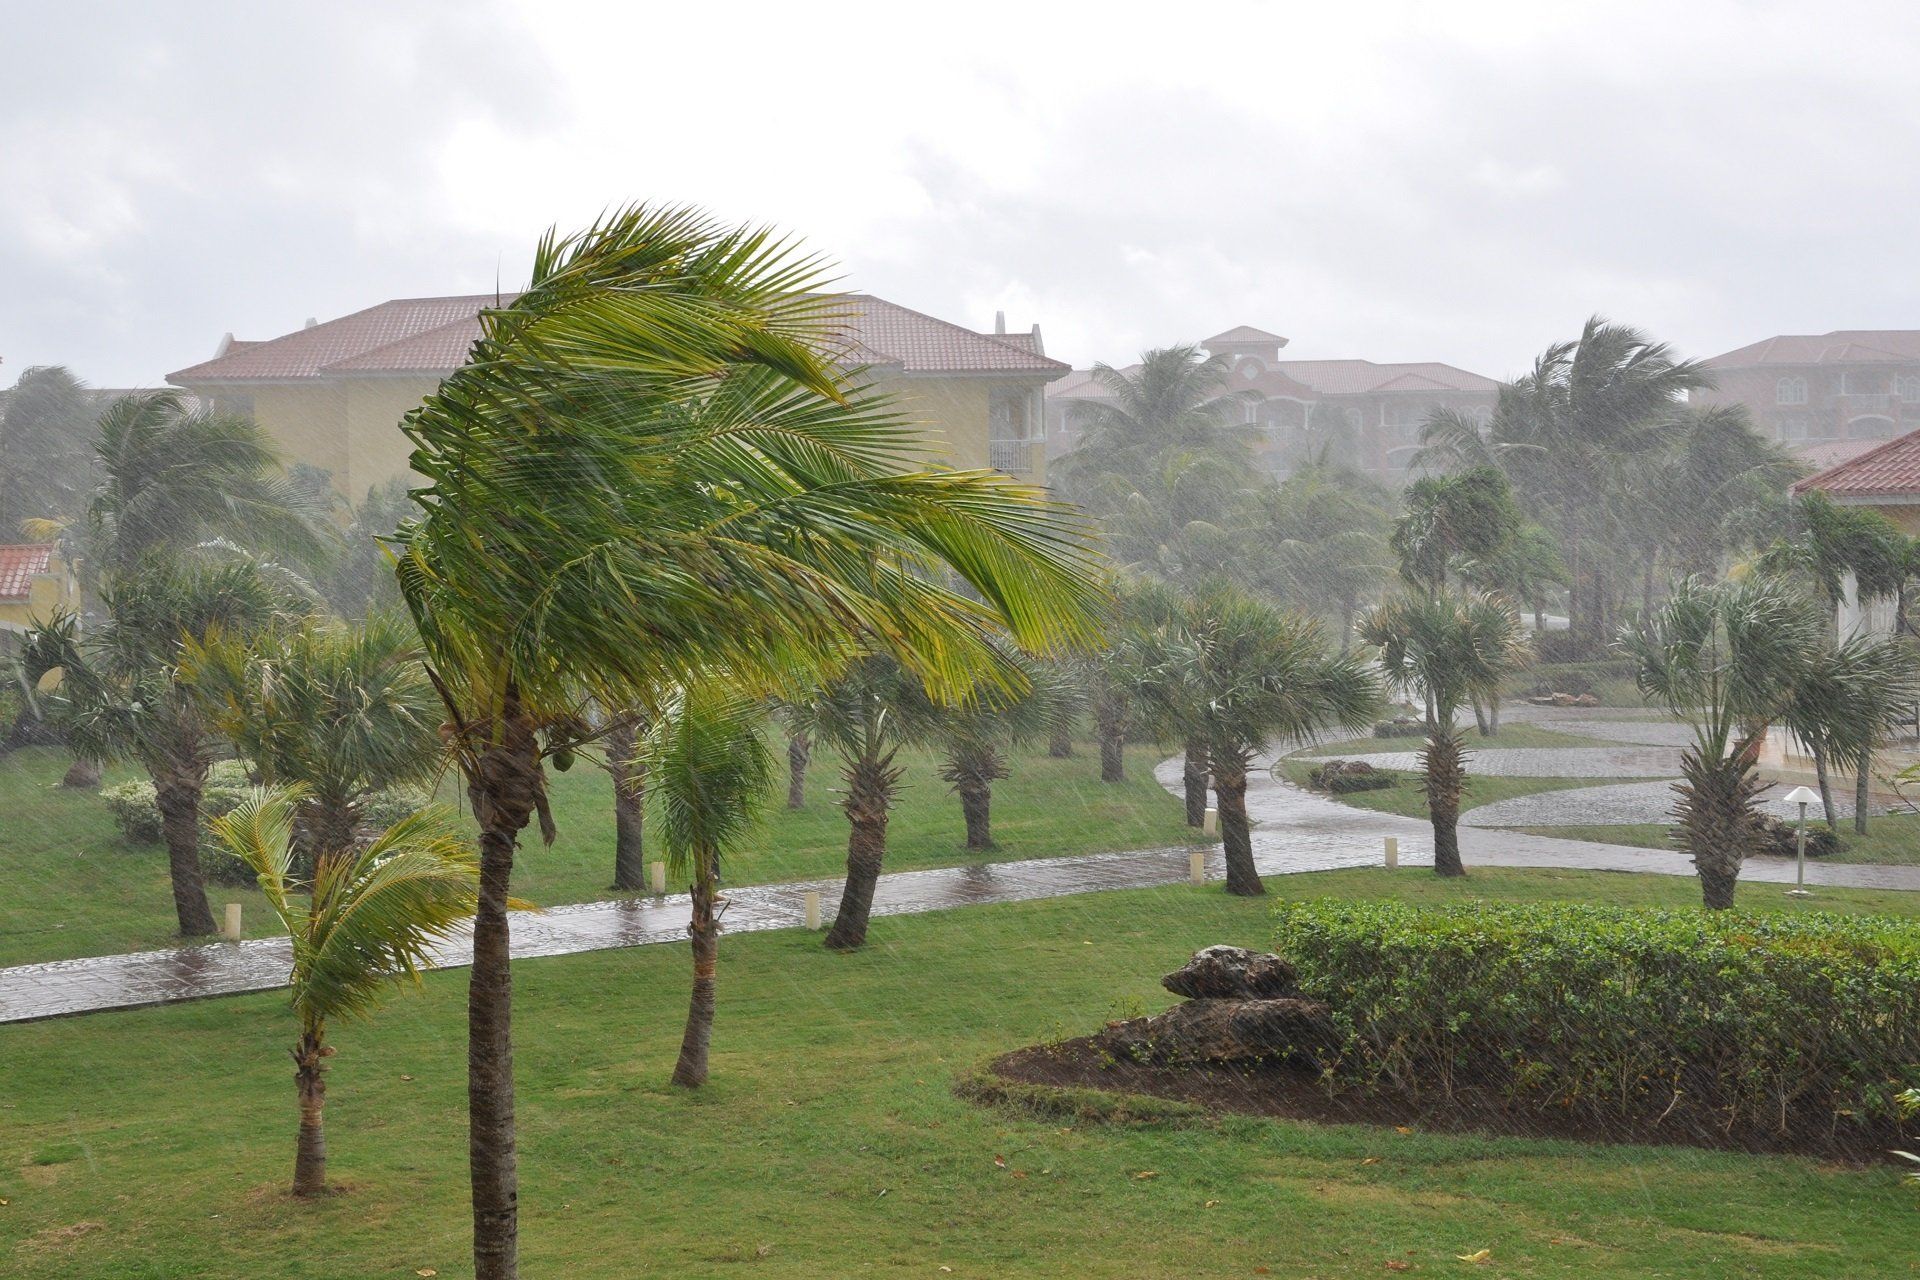 How to File a Florida Hurricane Ian Insurance Claim?